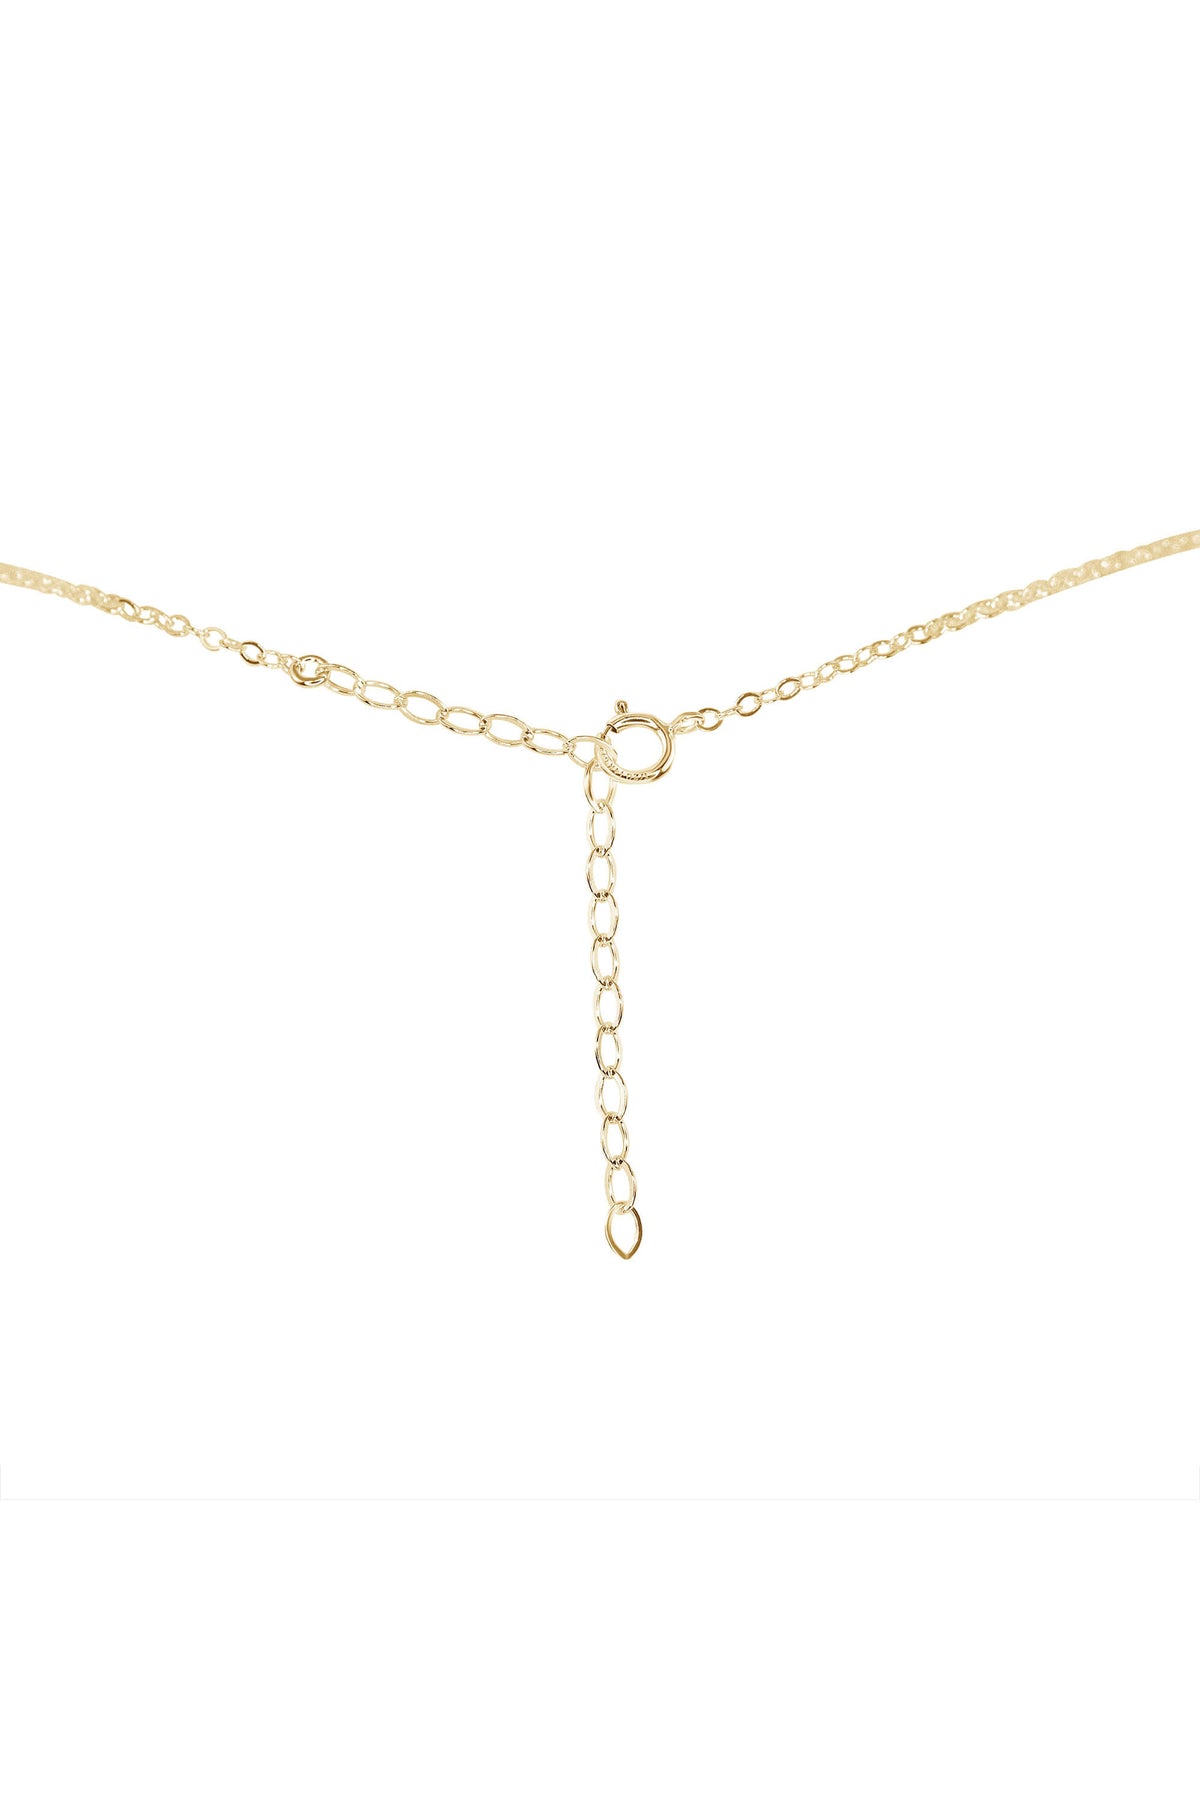 Raw Crystal Pendant Choker - Peridot - 14K Gold Fill - Luna Tide Handmade Jewellery